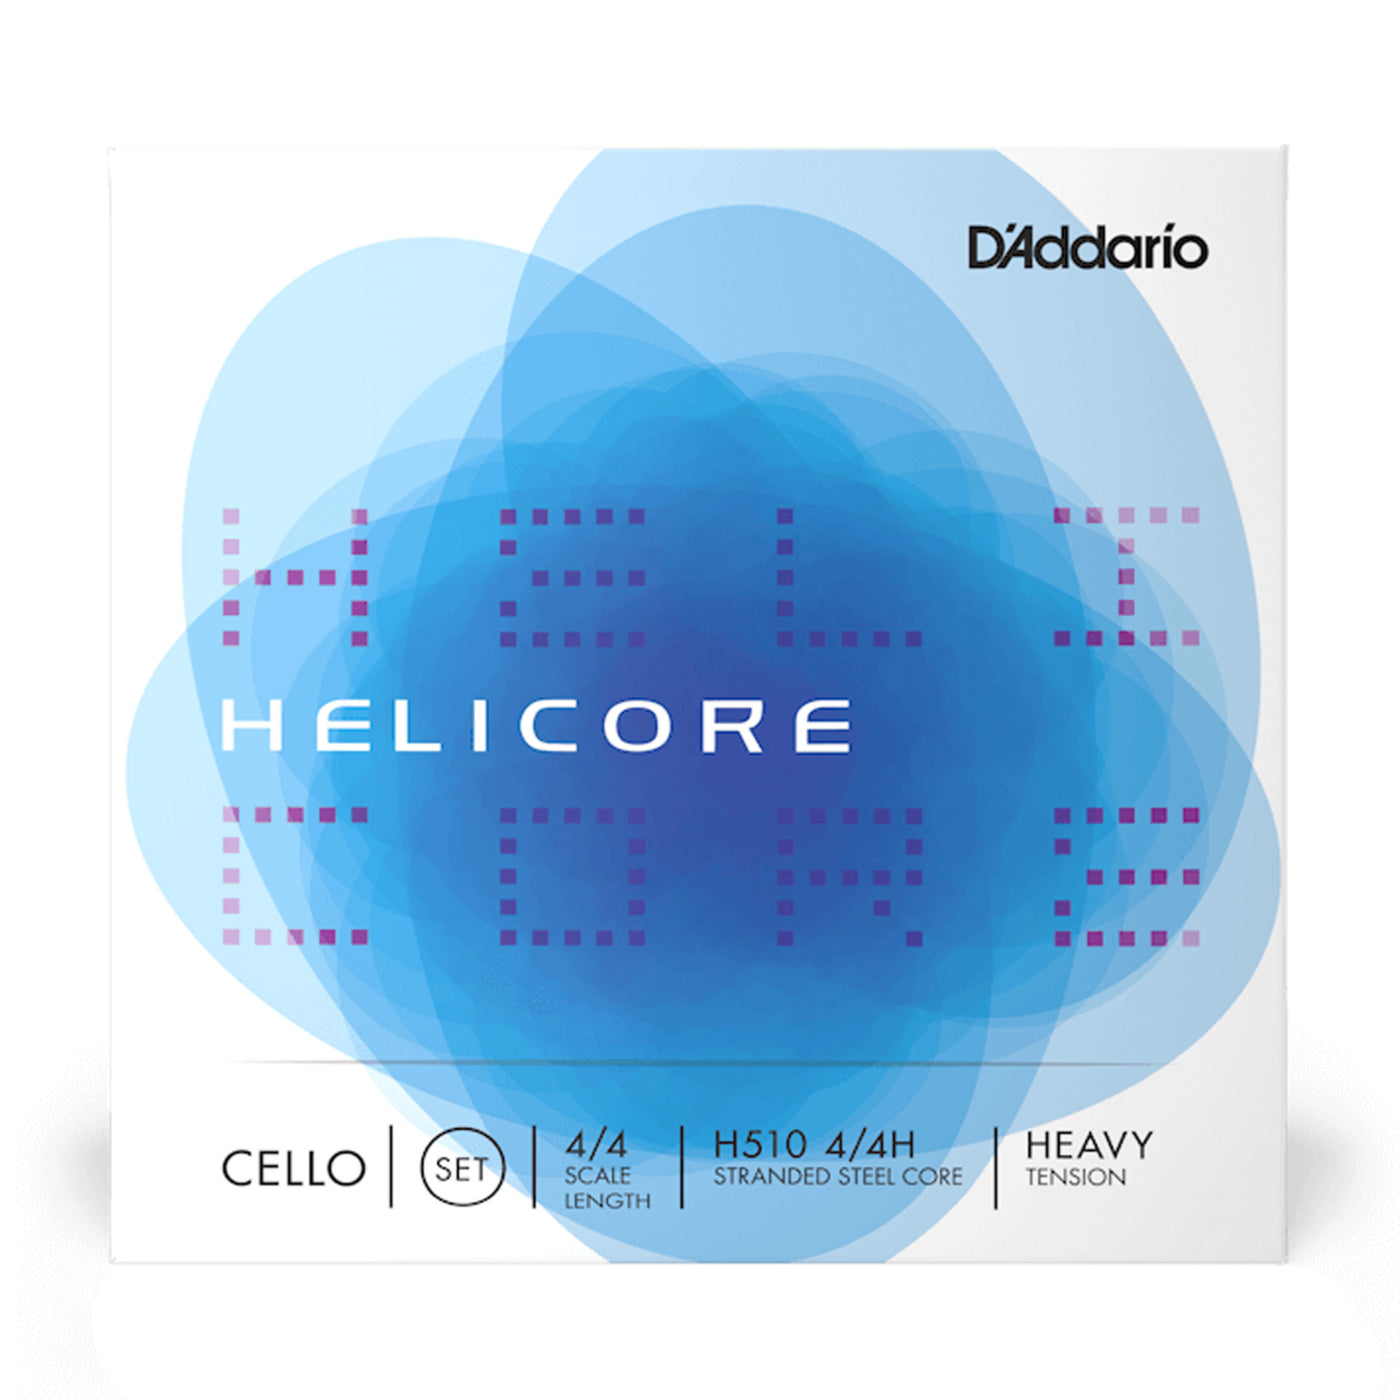 D'Addario Helicore Cello String Set, 4/4 Scale, Heavy Tension